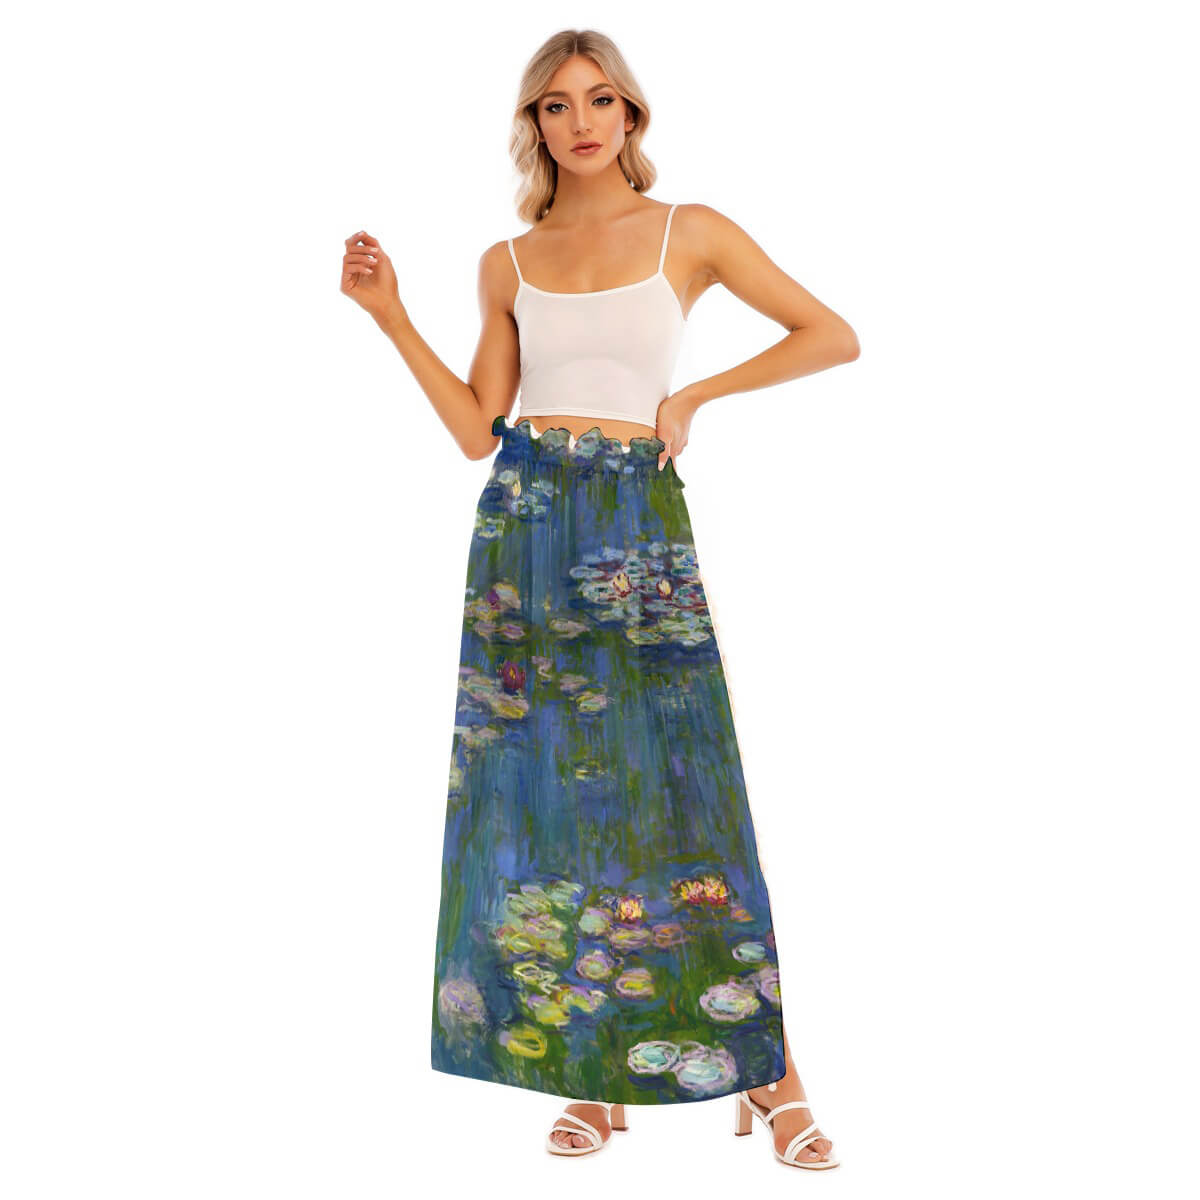 Enchanted Split Skirt featuring Claude Monet's Water Lilies artwork